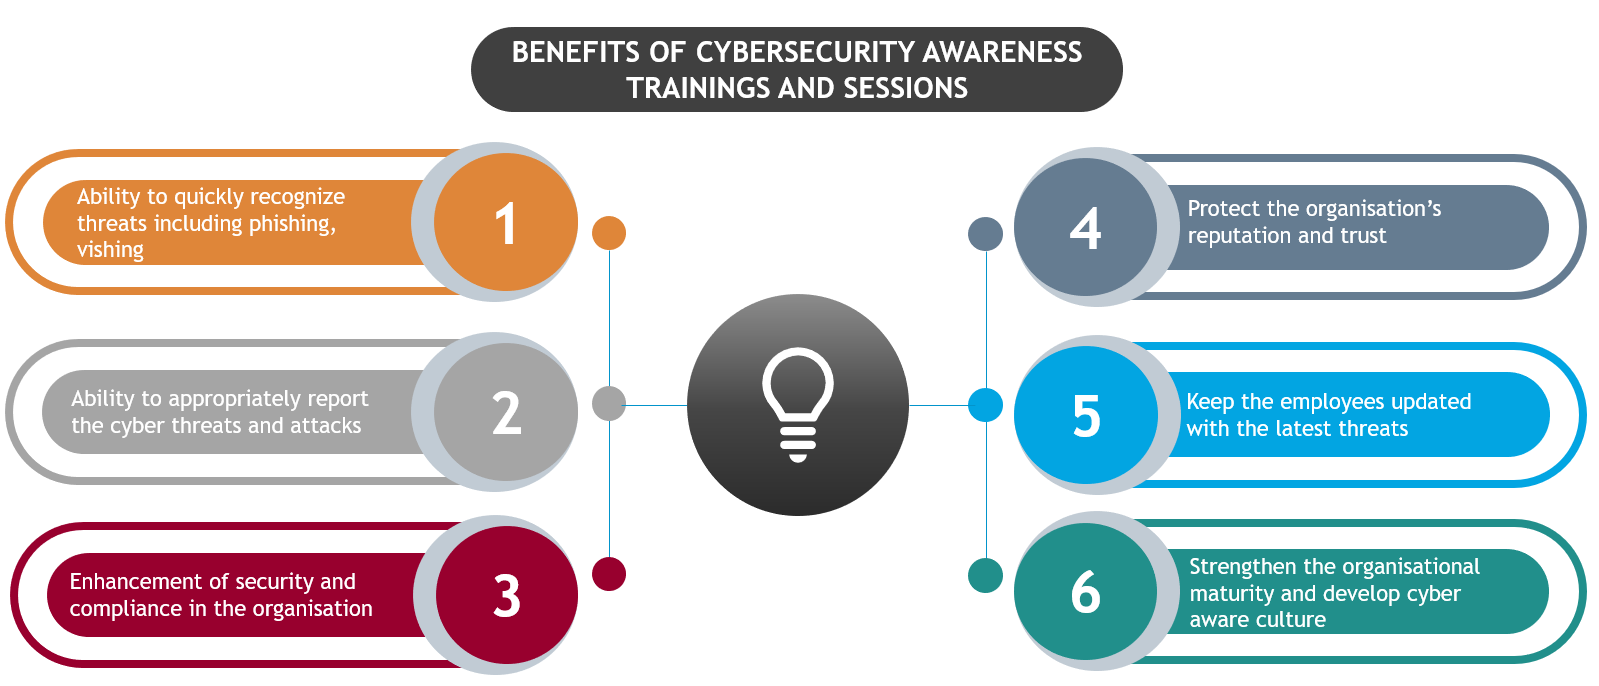 Cybersecurity Awareness Training - Cybercrimejunkies